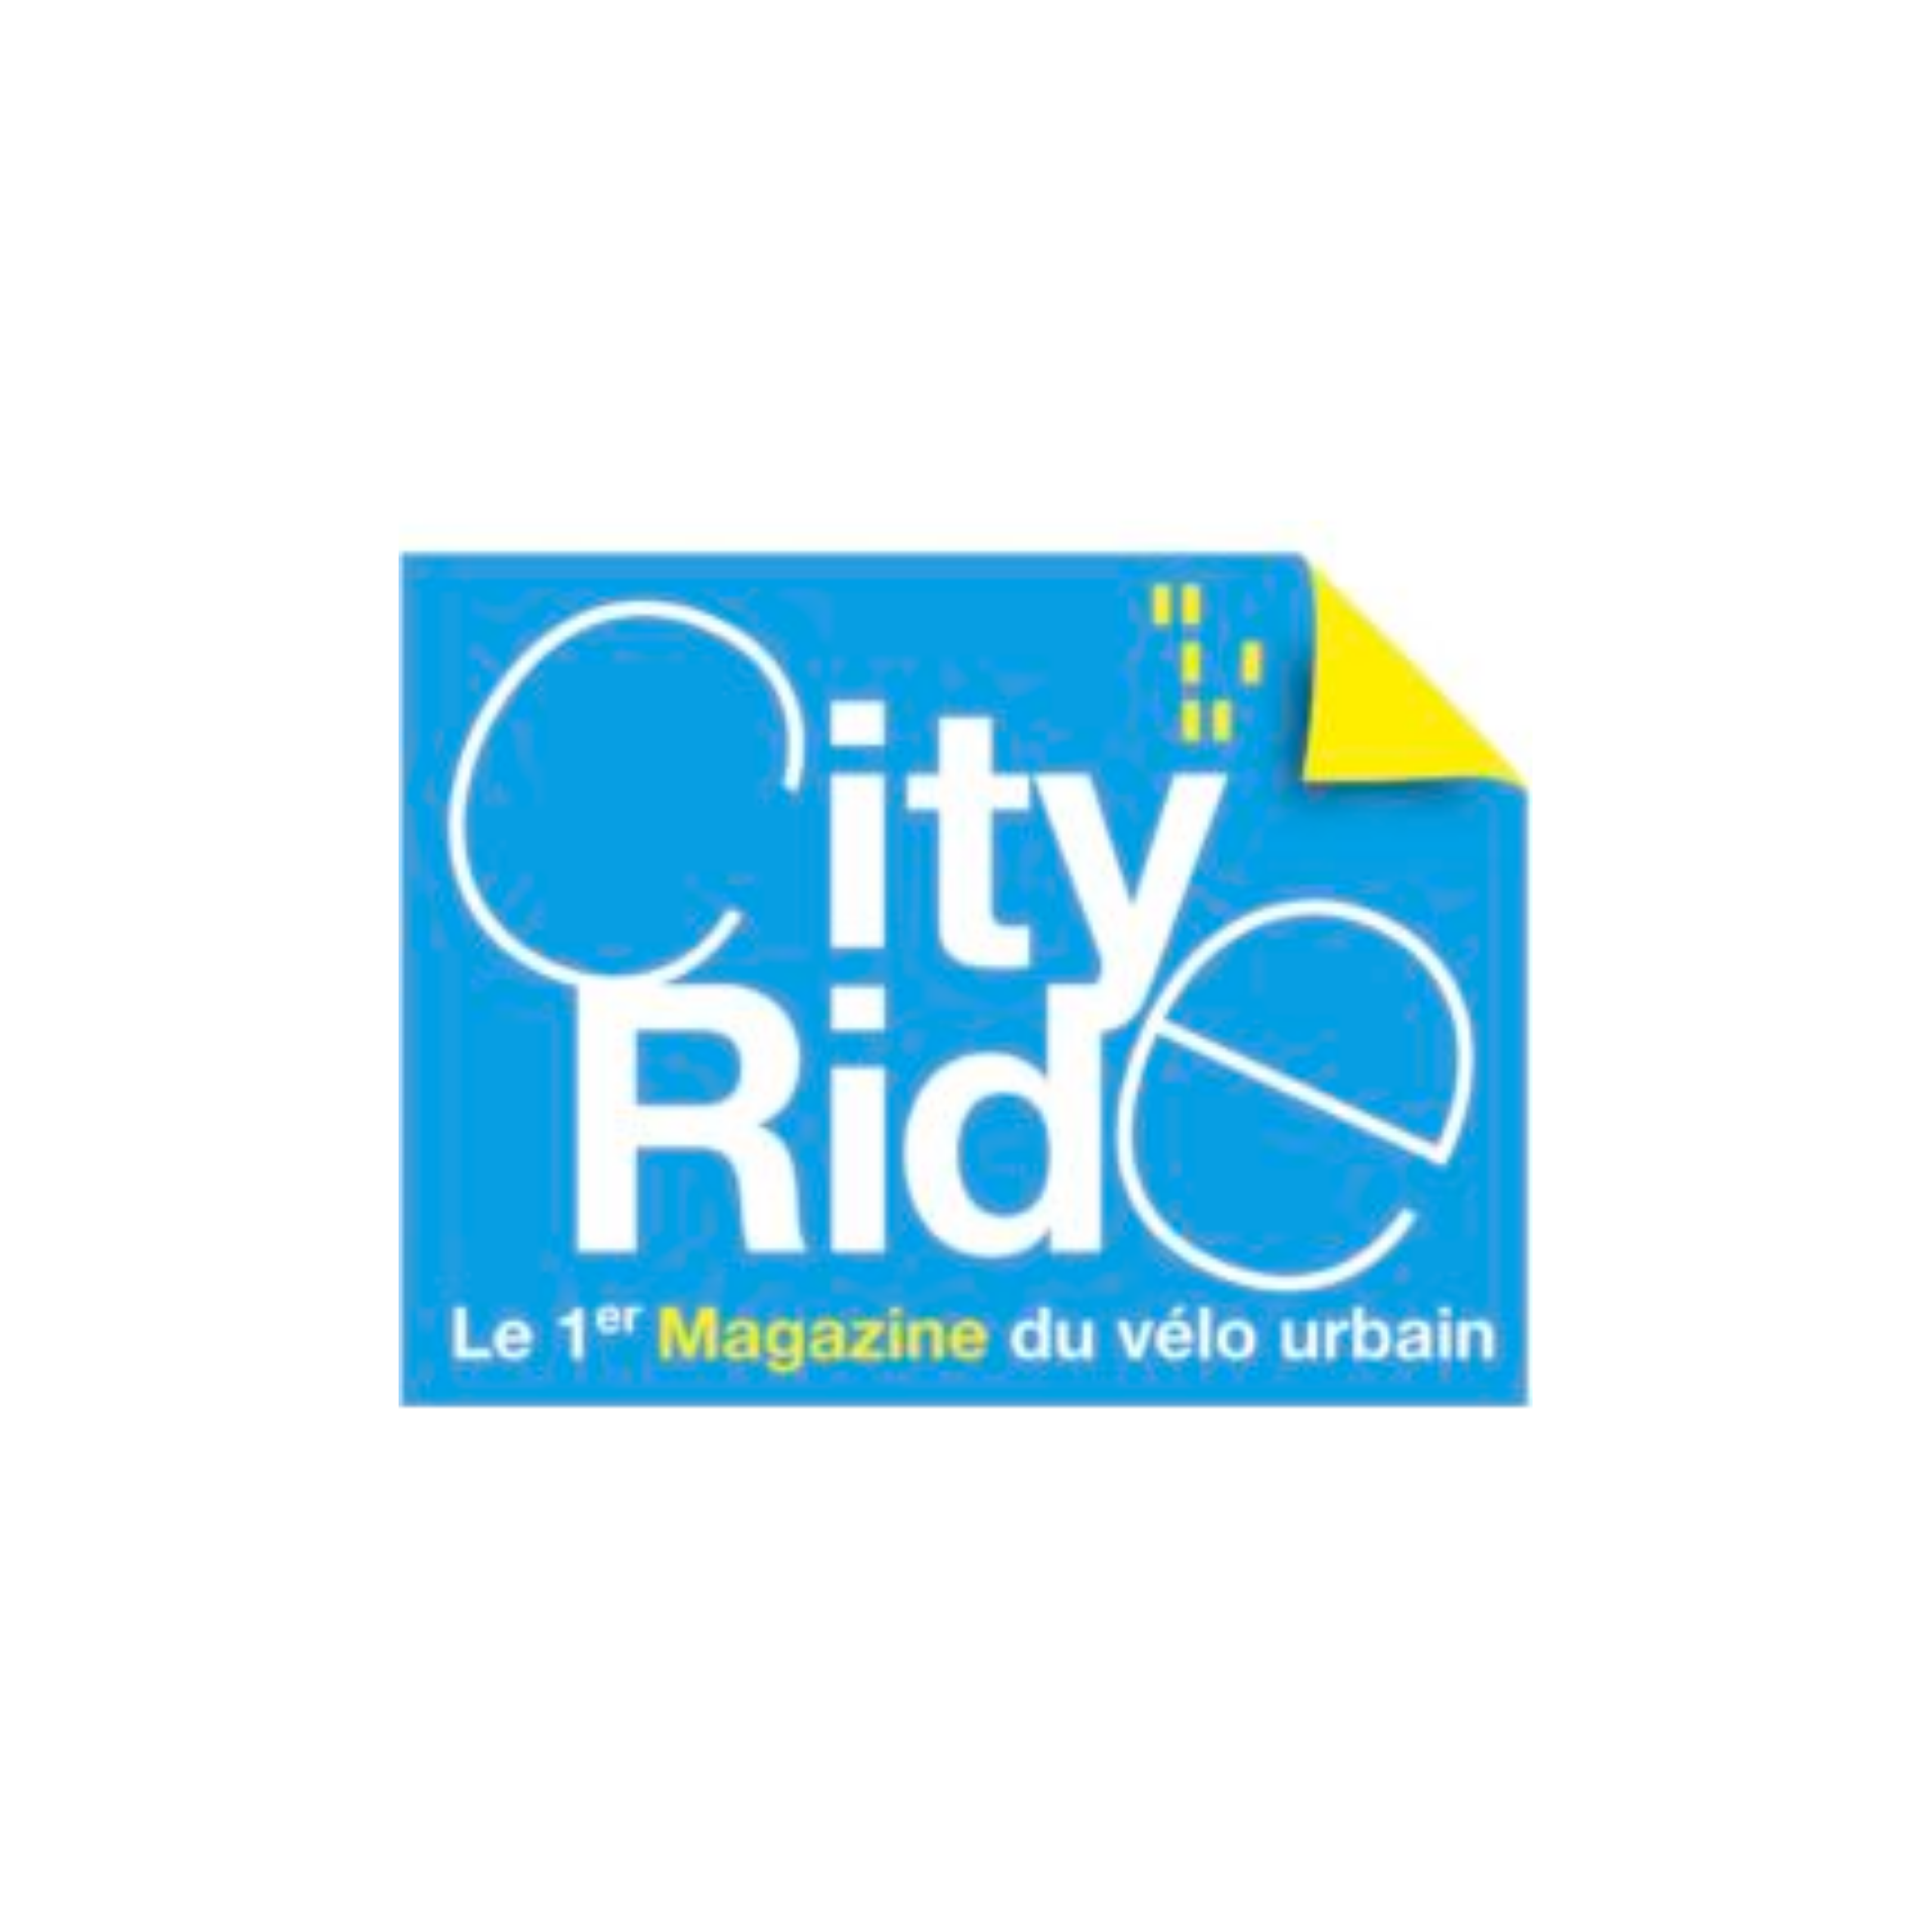 City ride logo png